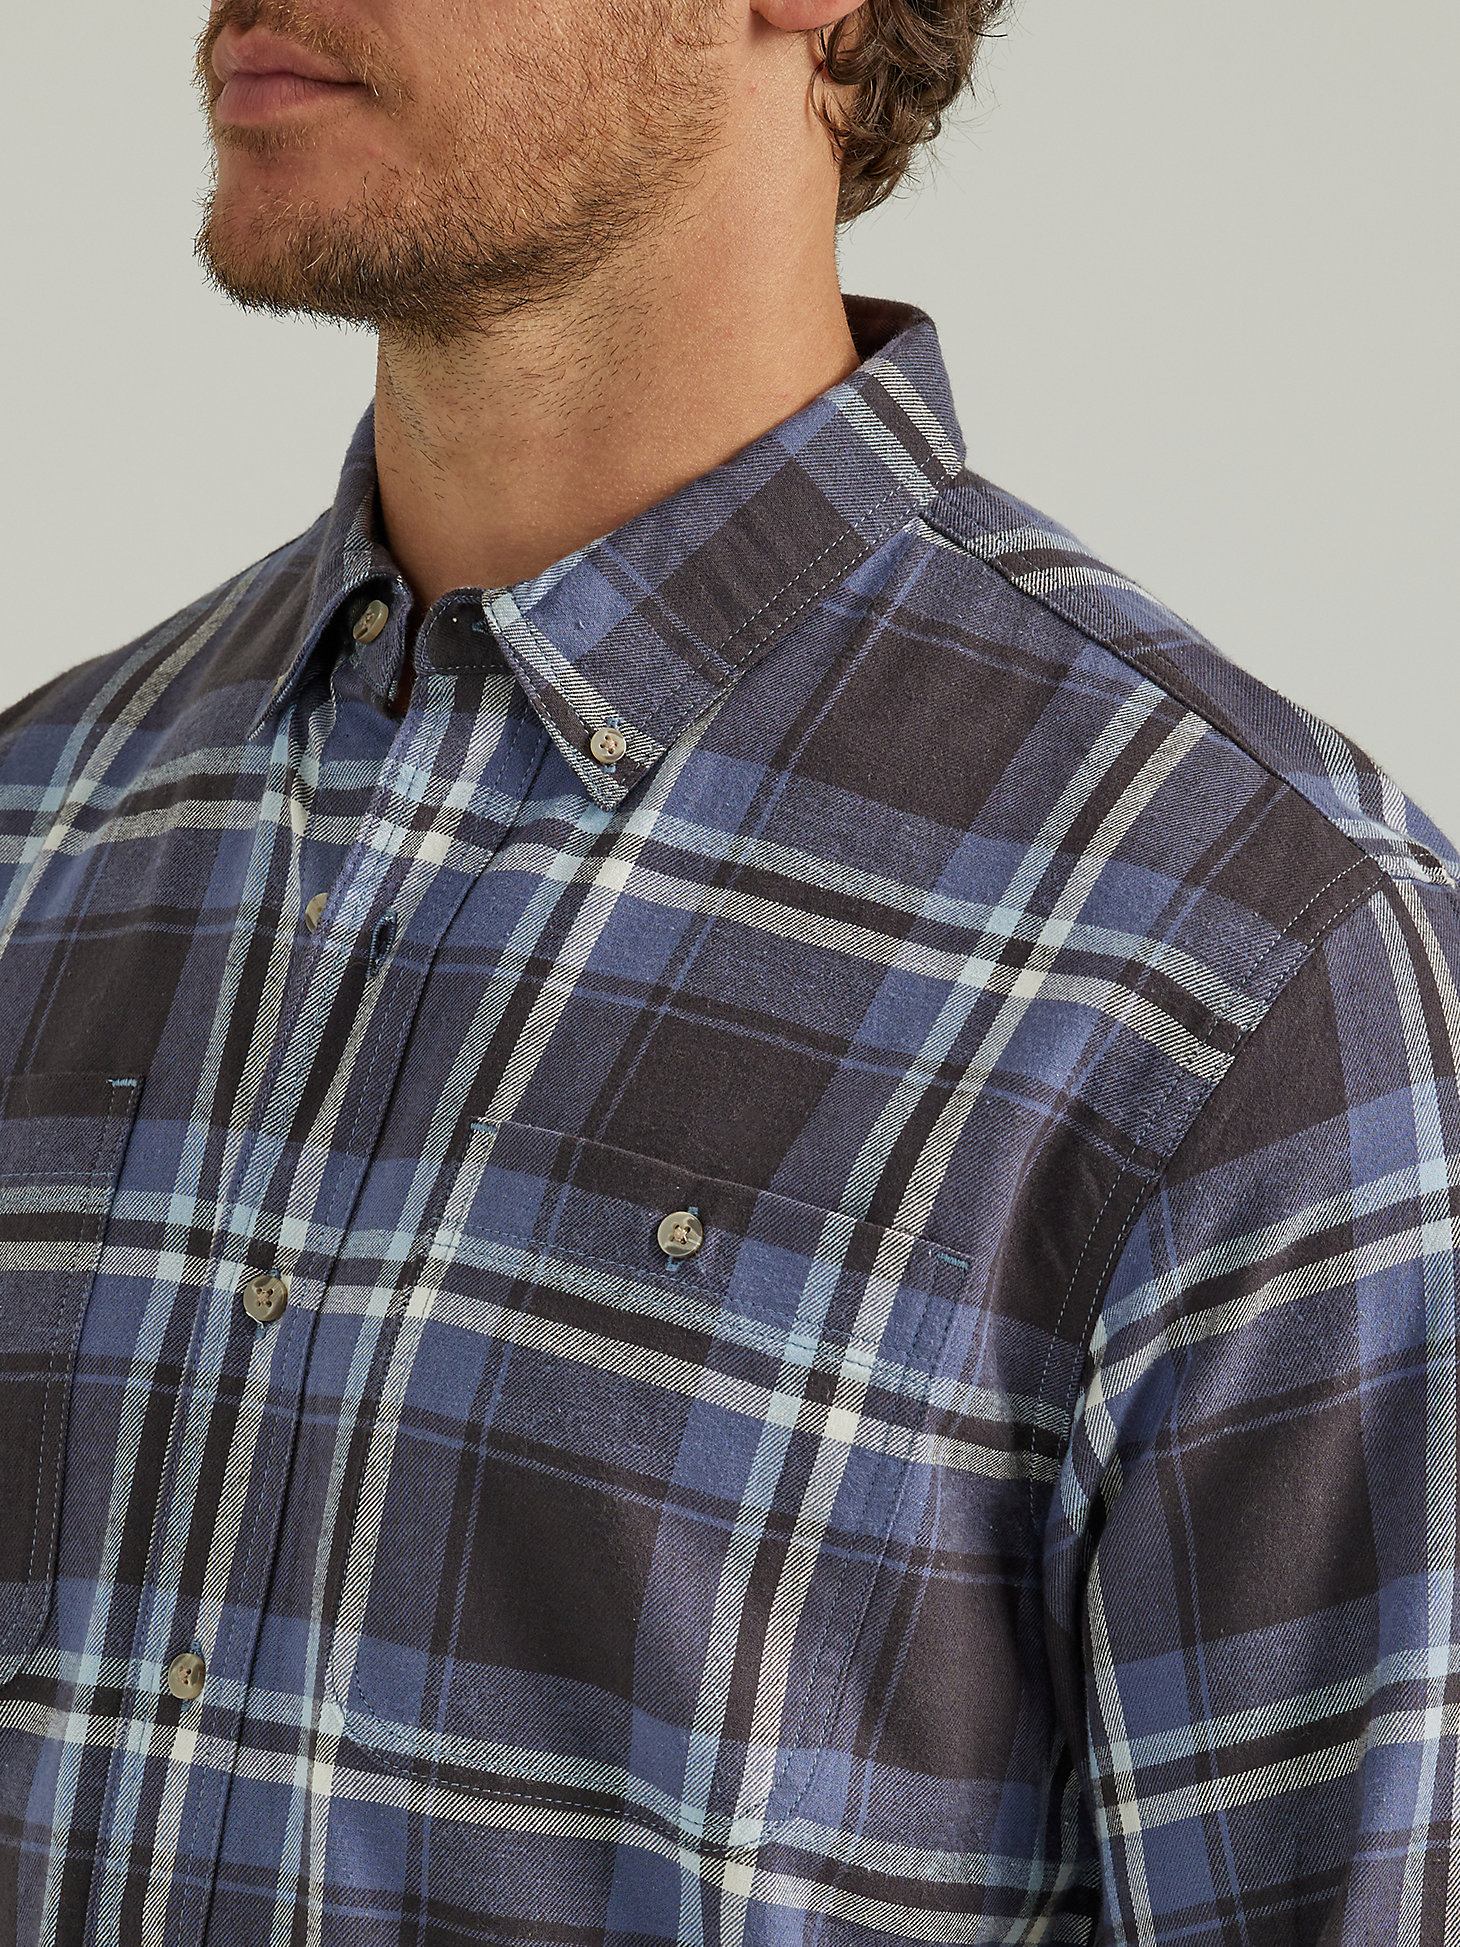 Wrangler Rugged Wear® Long Sleeve Flannel Plaid Button-Down Shirt in Navy Indigo alternative view 2